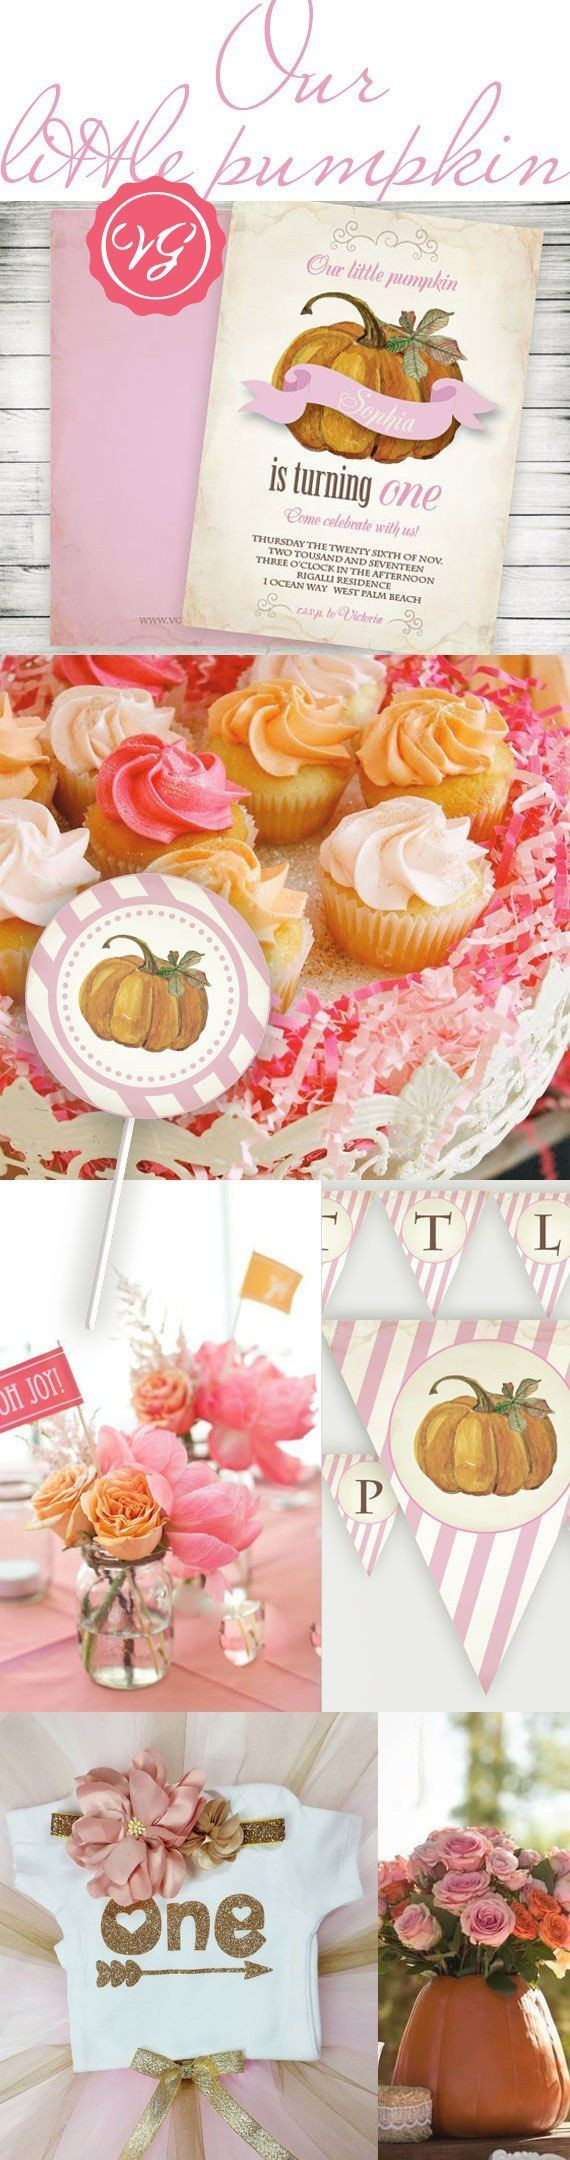 October Birthday Party Ideas
 Best 25 October birthday ideas on Pinterest